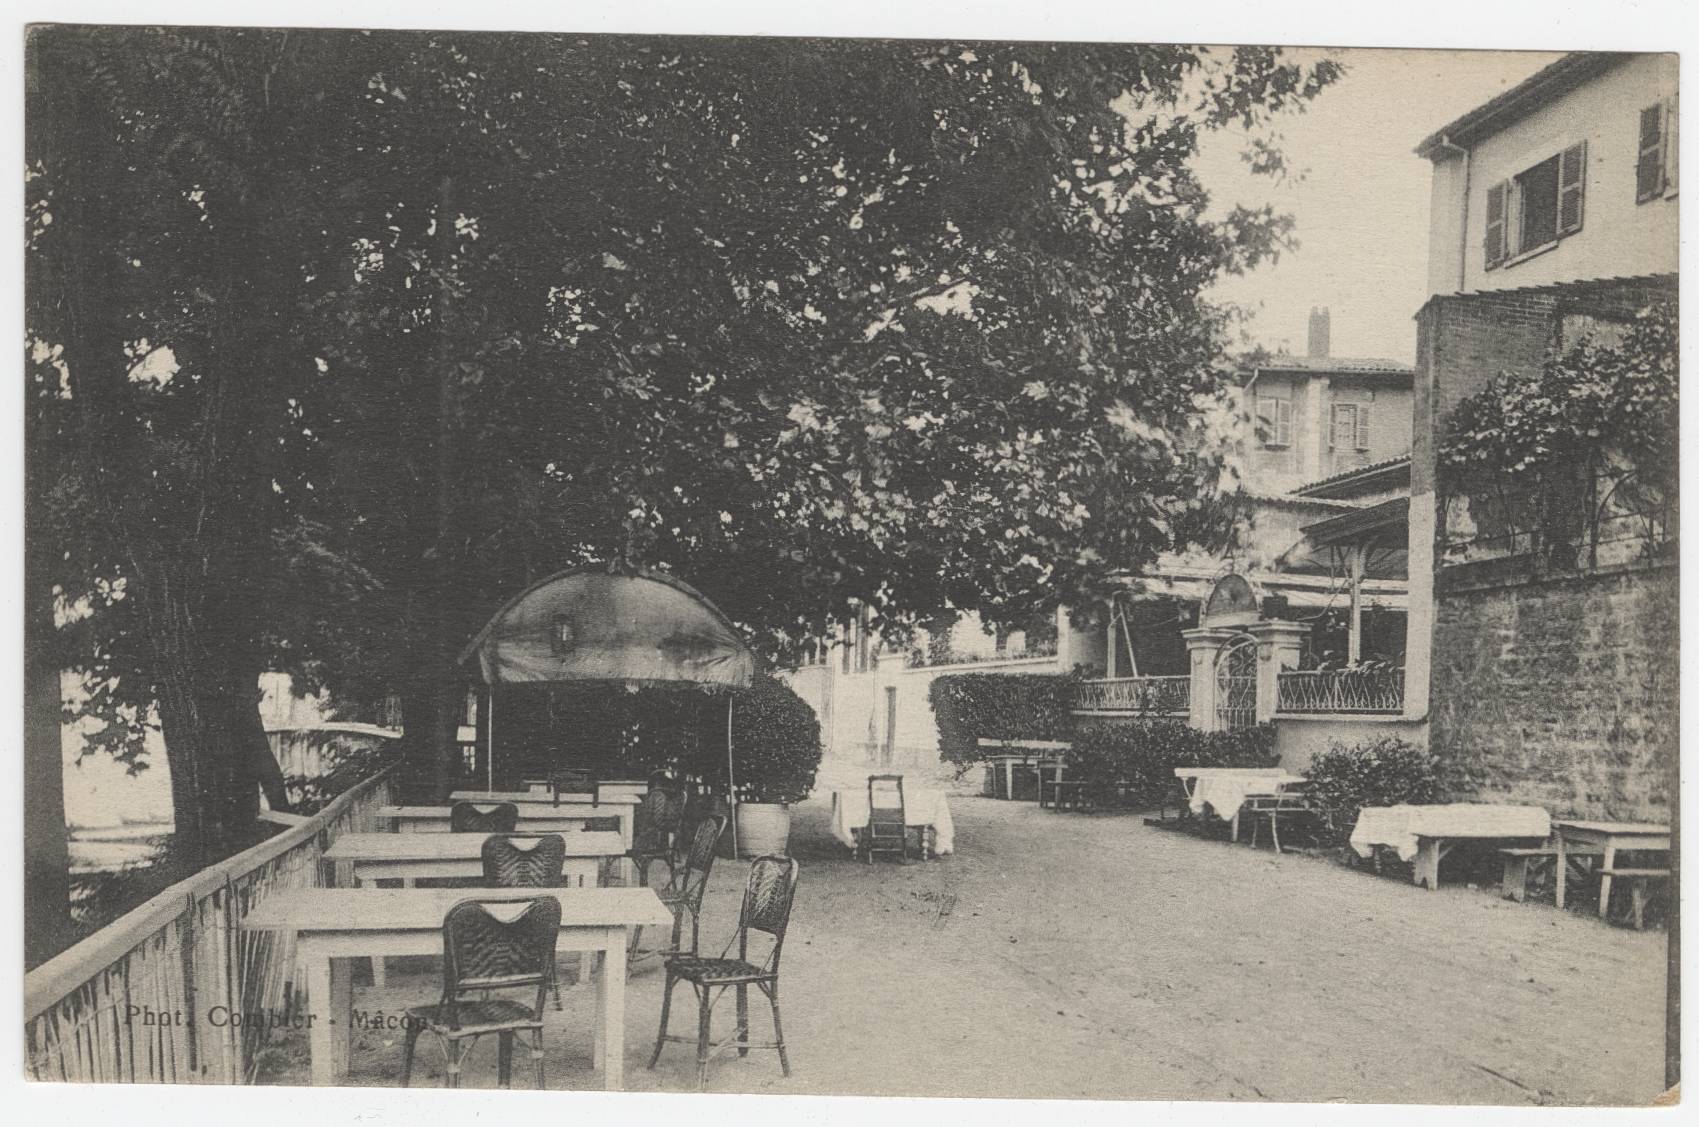 Café-restaurant de la Terrasse - Saint-Rambert-L'Ile Barbe : carte postale NB (vers 1910, cote : 4FI/2322)